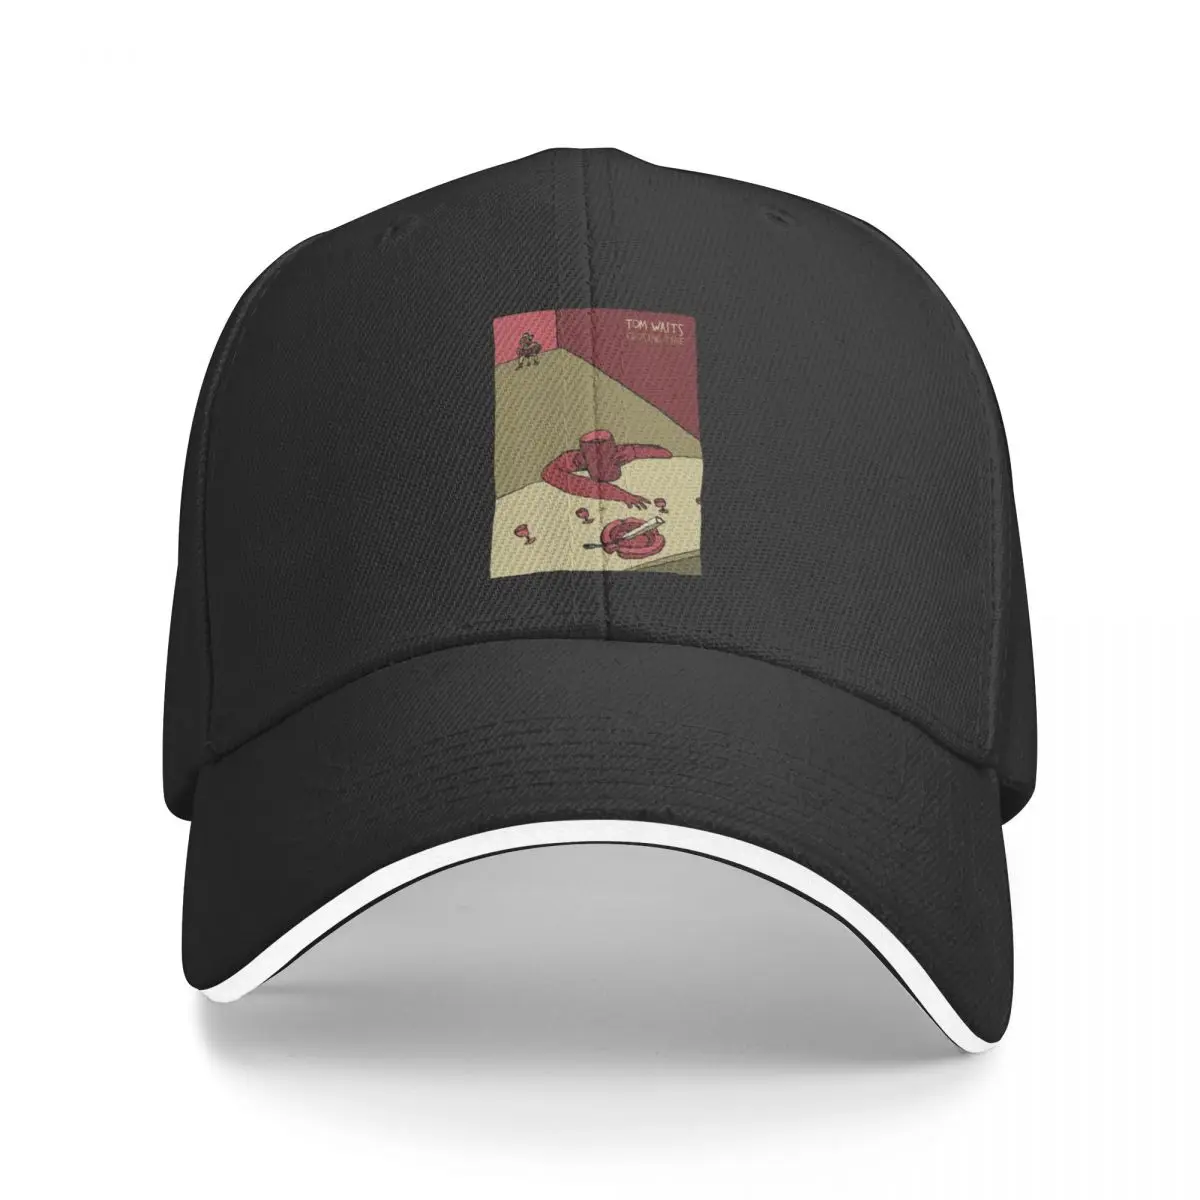 

New Tom Waits - Closing Time Cap Baseball Cap fur hat Hood men's hat luxury Women's